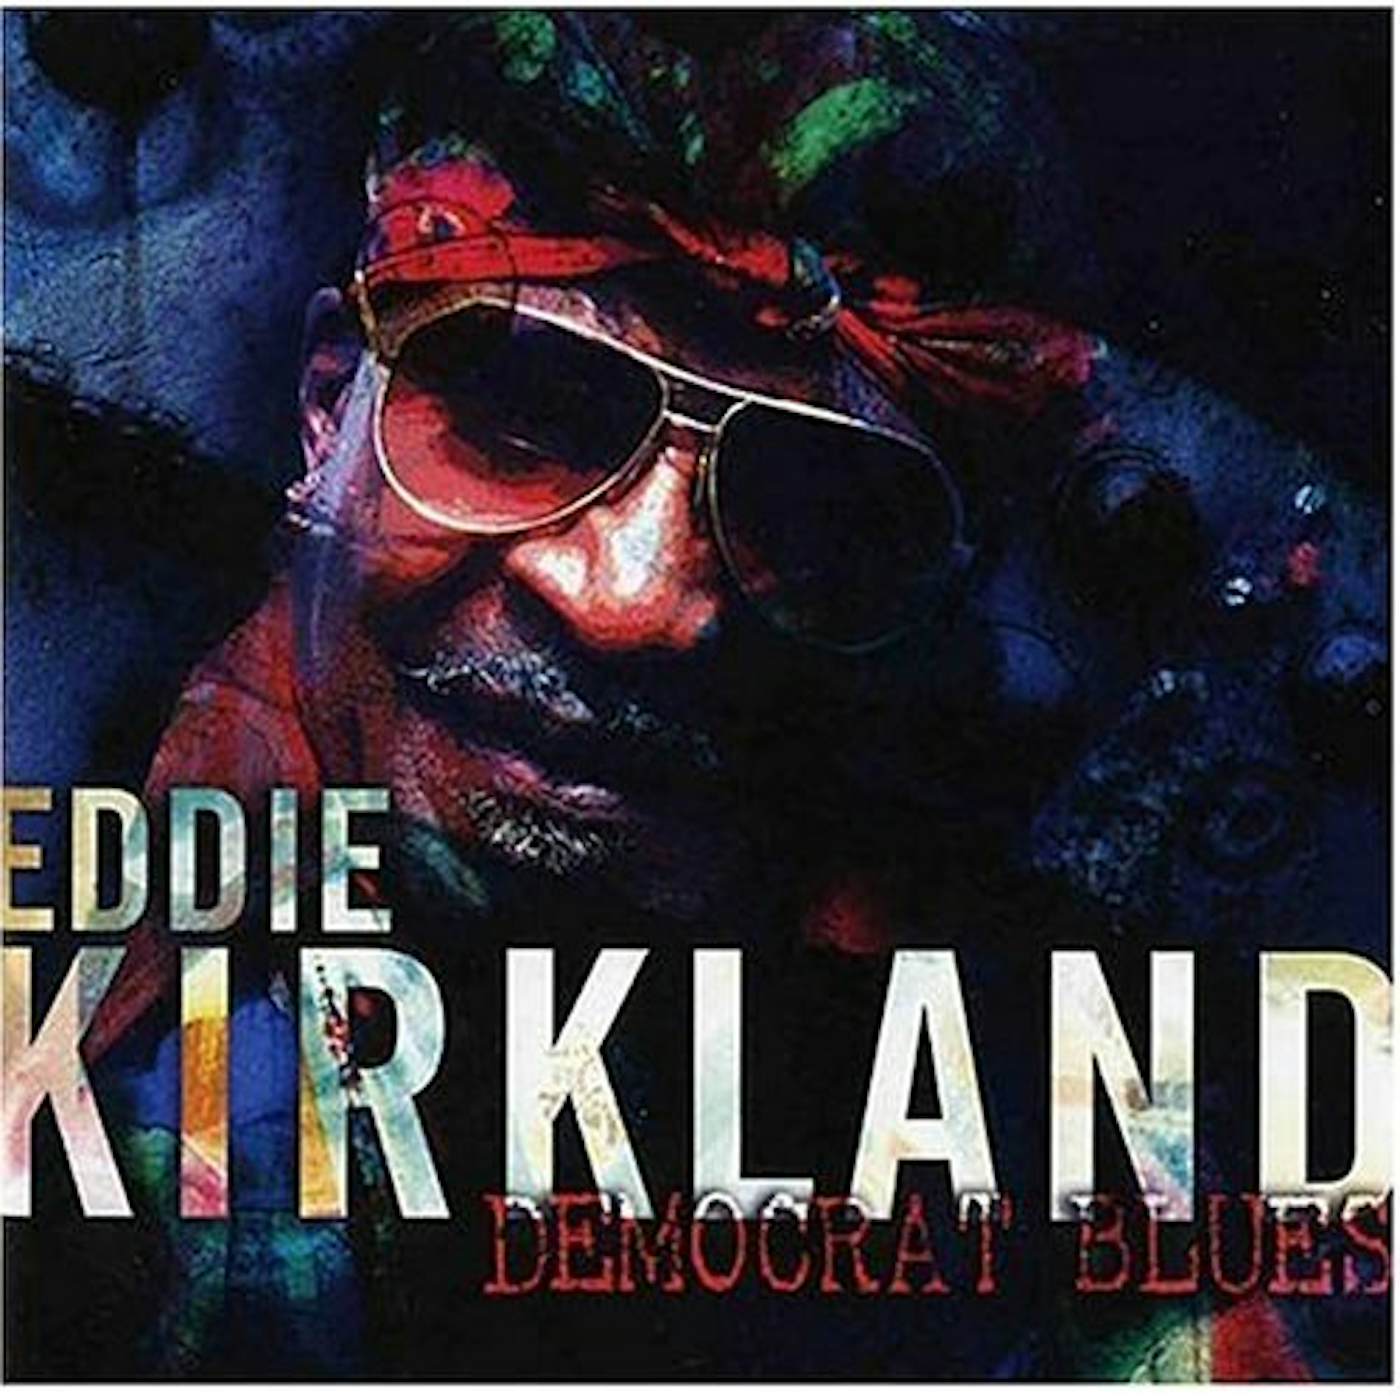 Eddie Kirkland DEMOCRAT BLUES CD